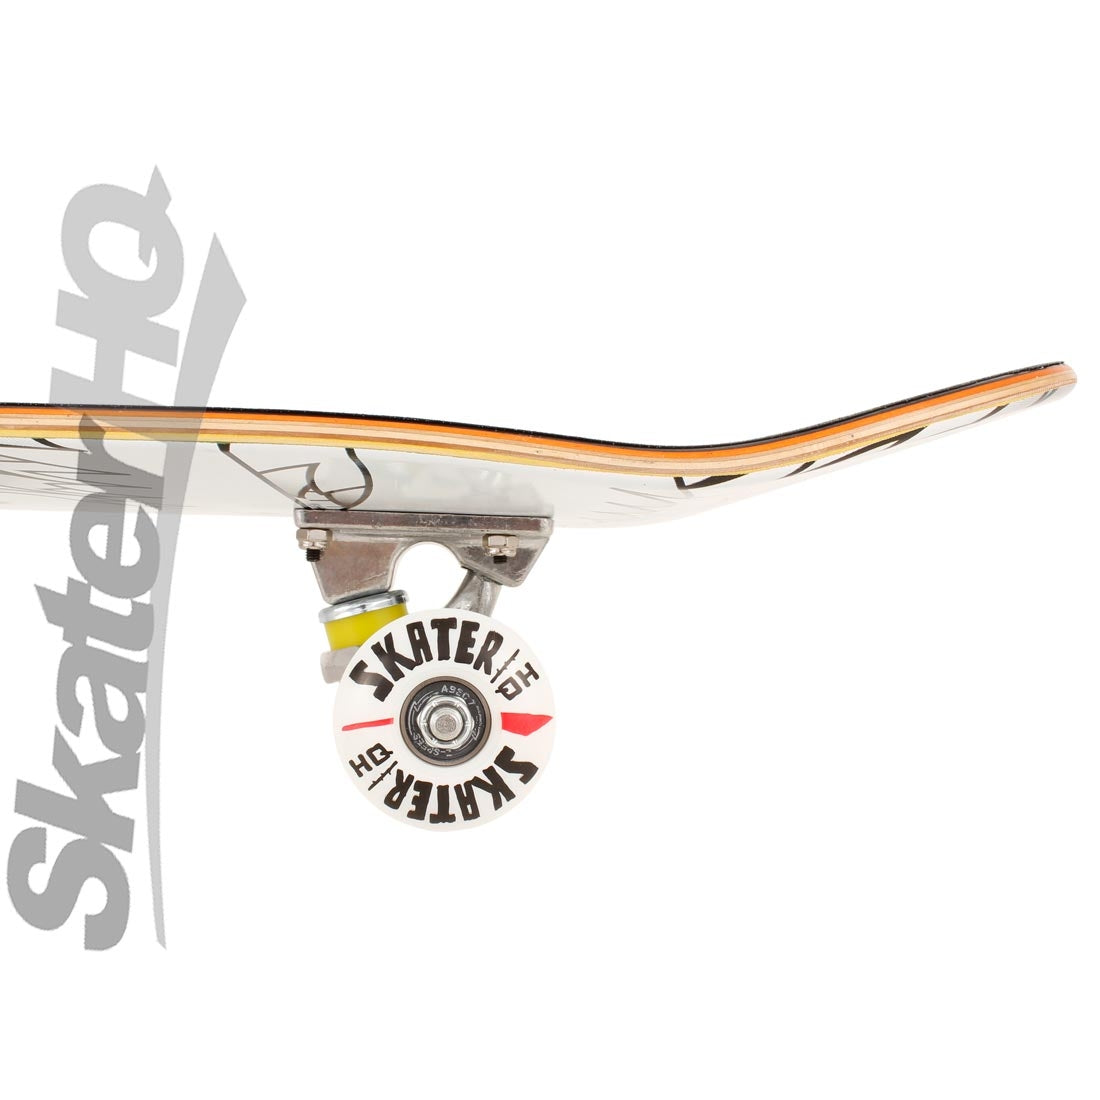 Skater HQ Seagulls 7.25 Mini S Complete Skateboard Completes Modern Street